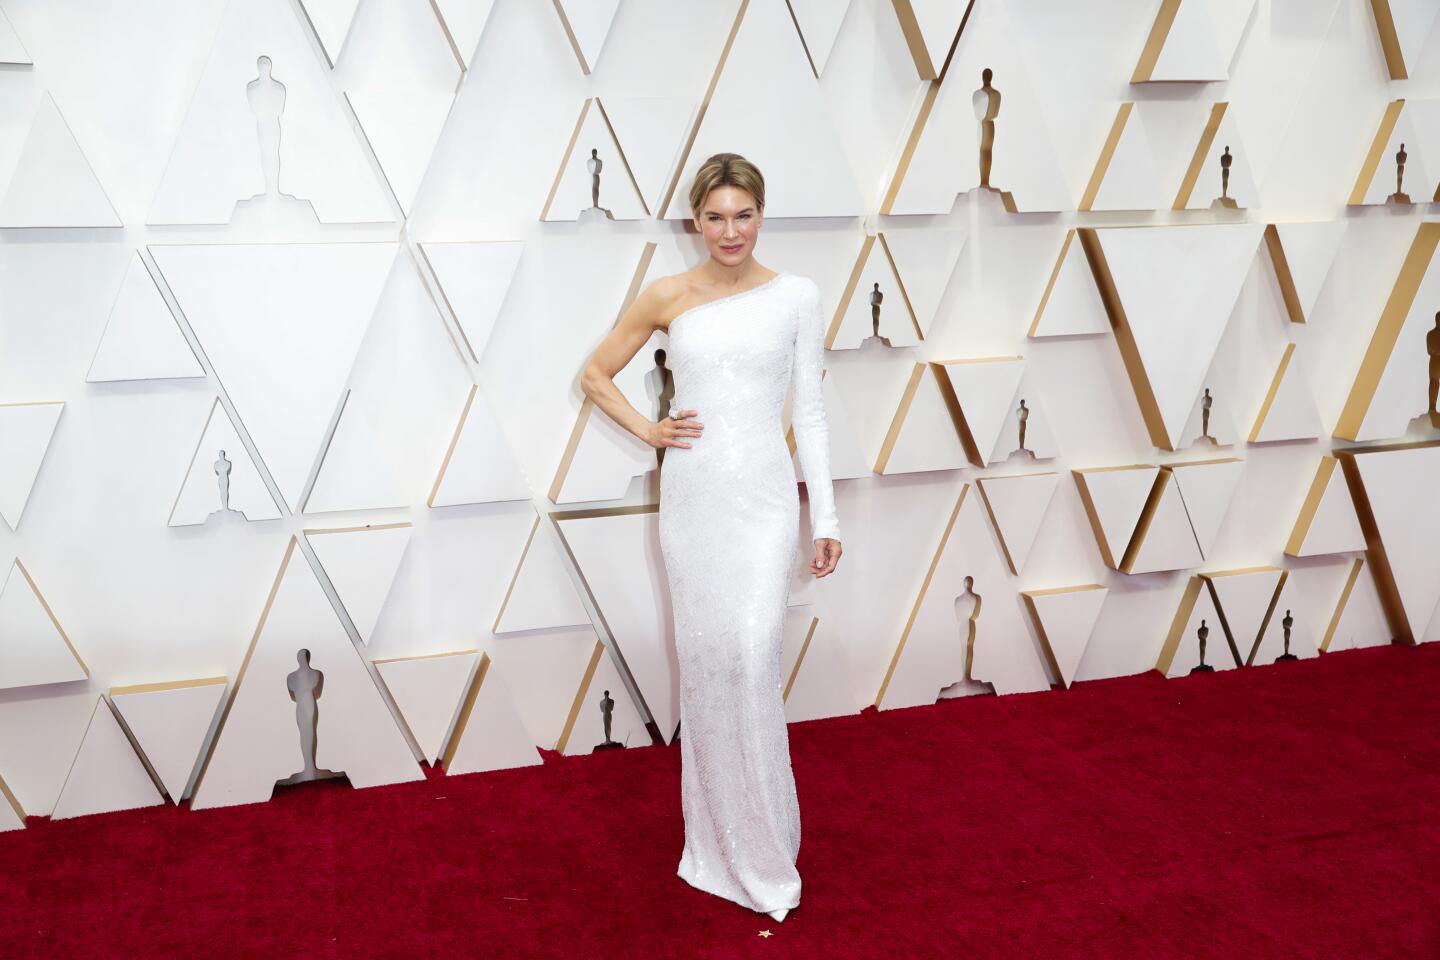 Janelle Monáe Wears a Crystal Hooded Dress to the 2020 Oscars